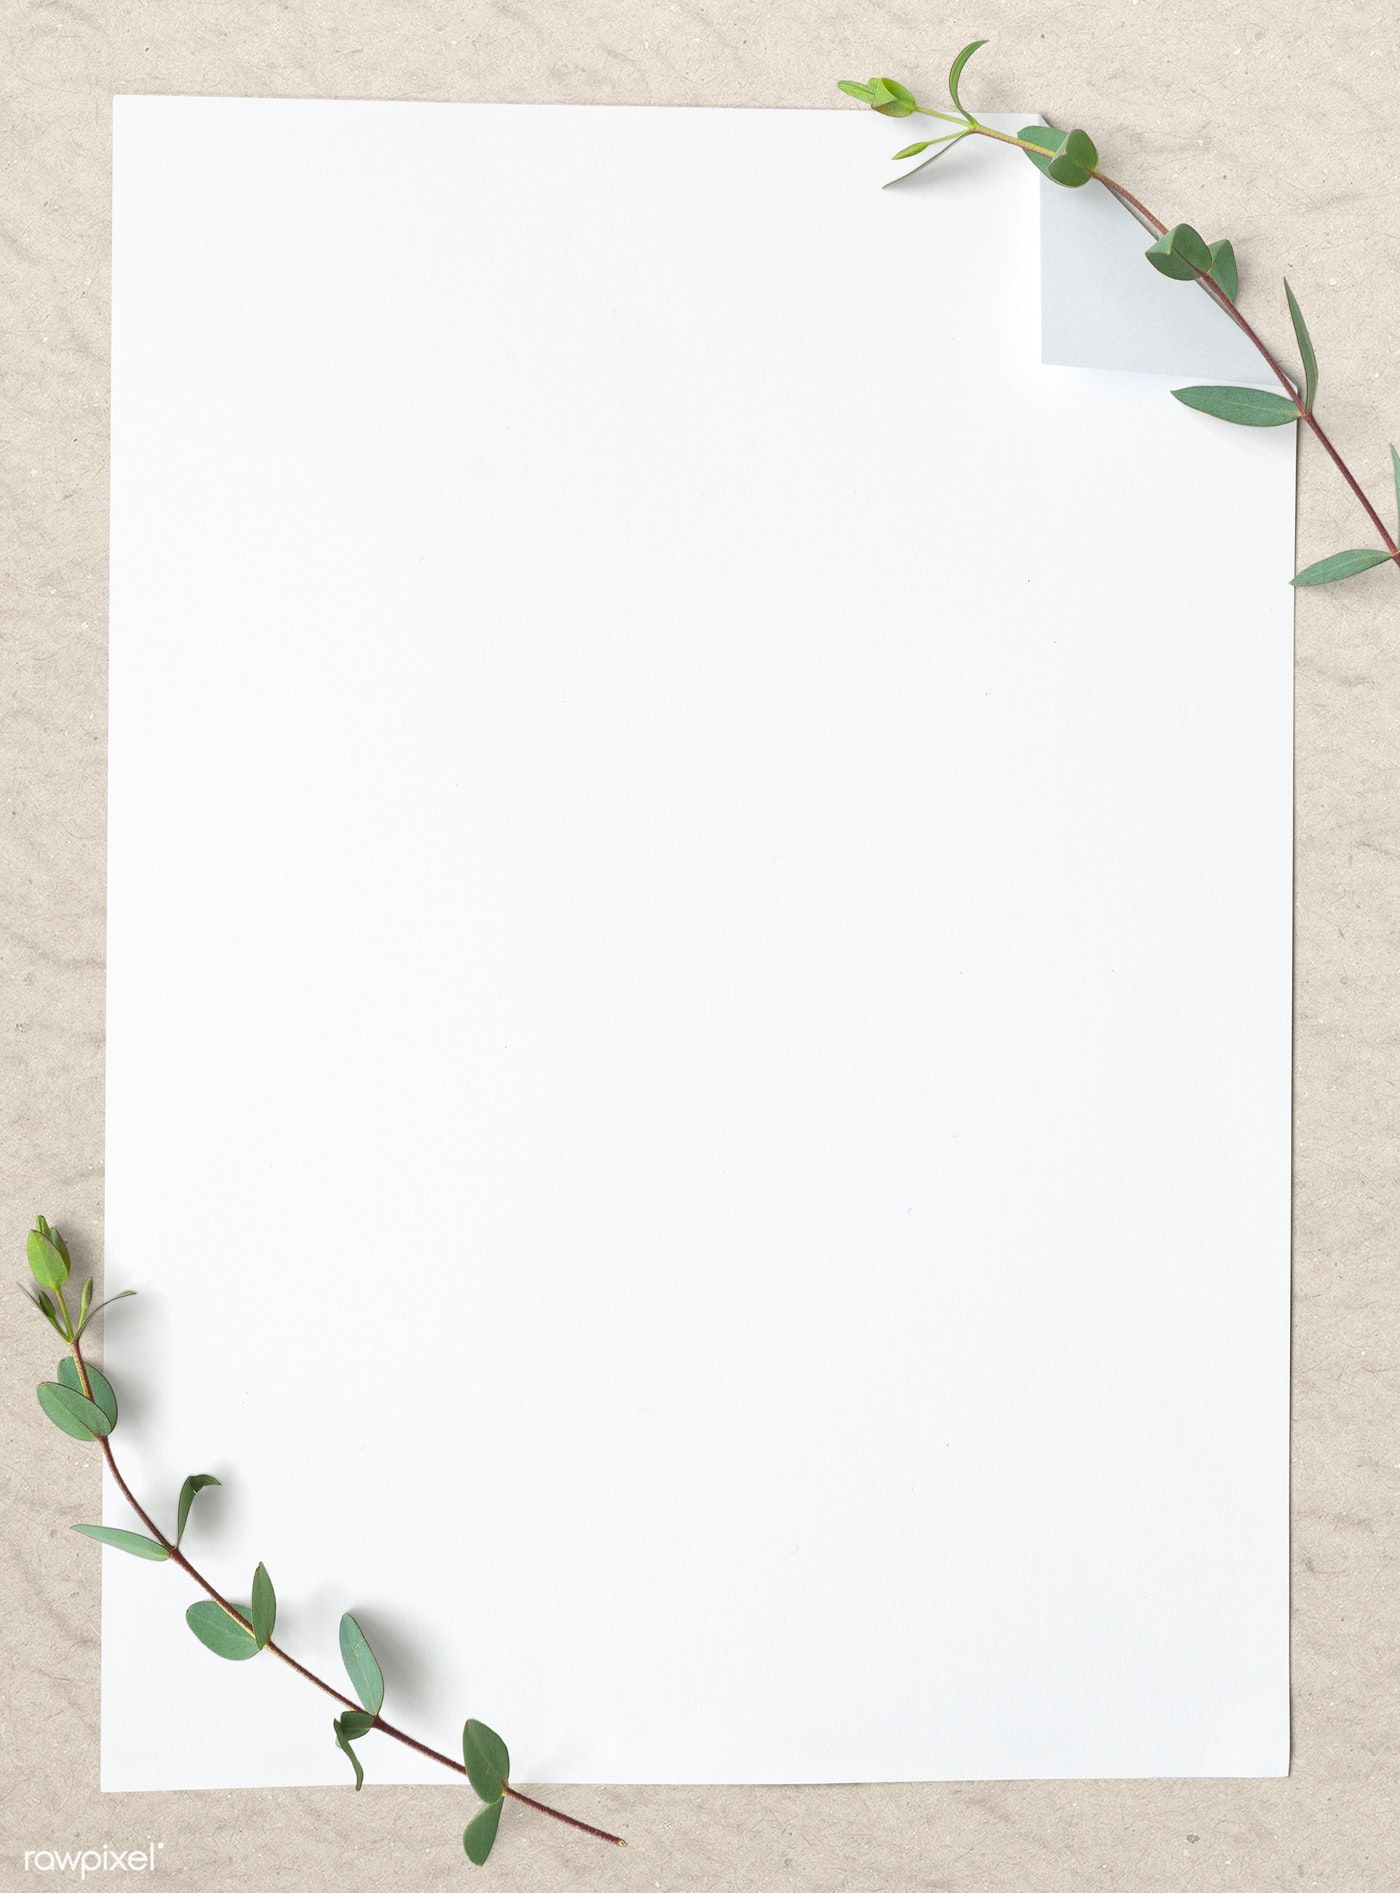 blank white paper